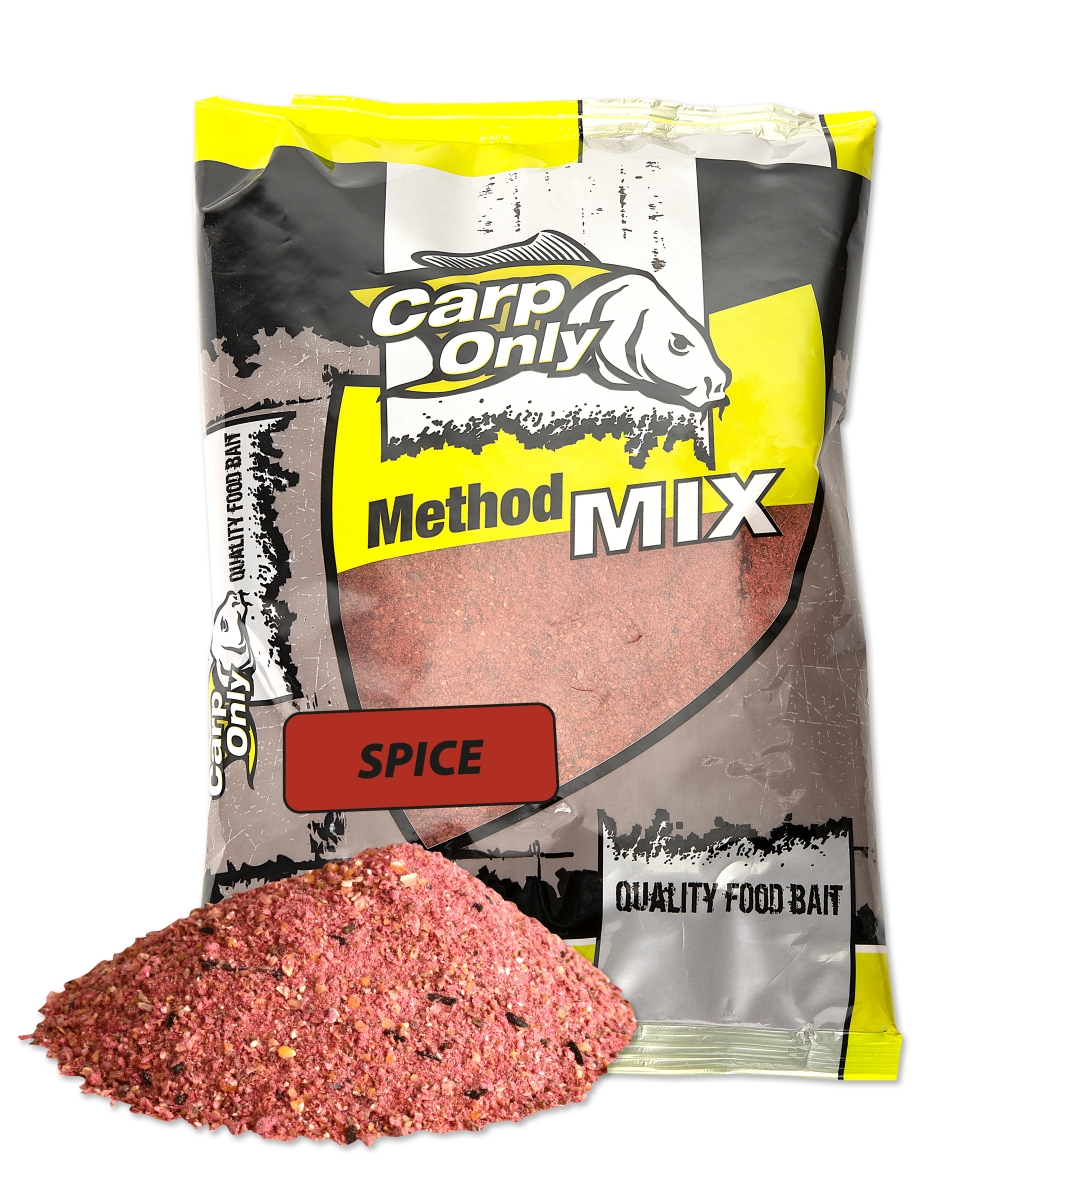 Method mix Carp Only Spice 1kg